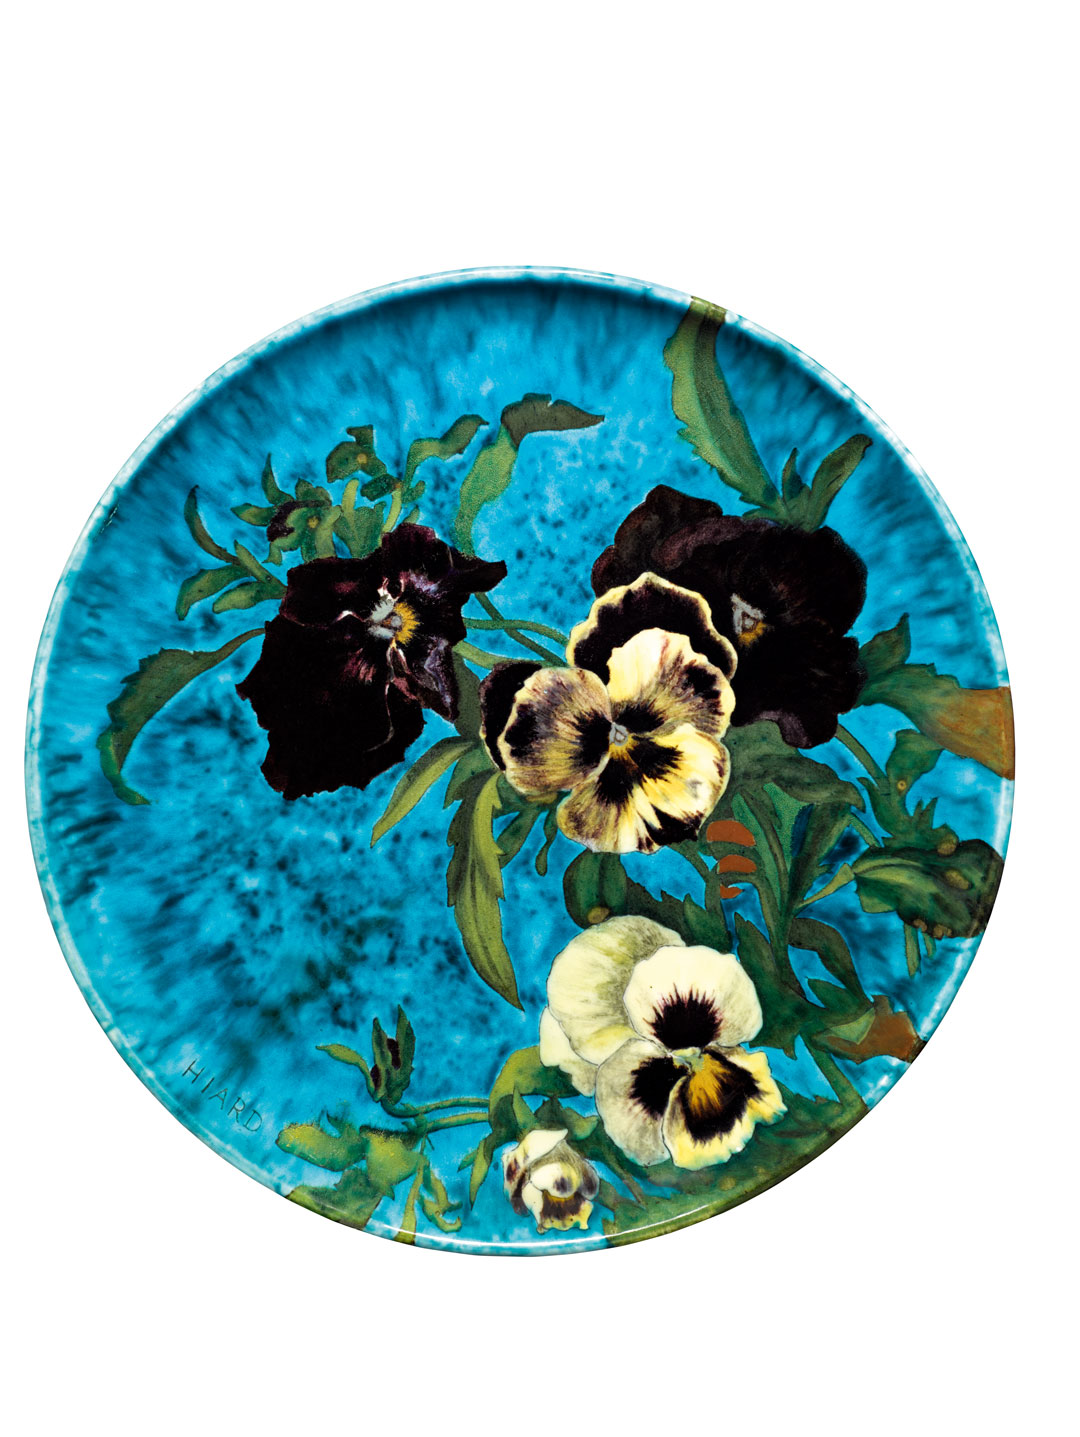 Théodore Deck, CA. 1880–90, earthenware